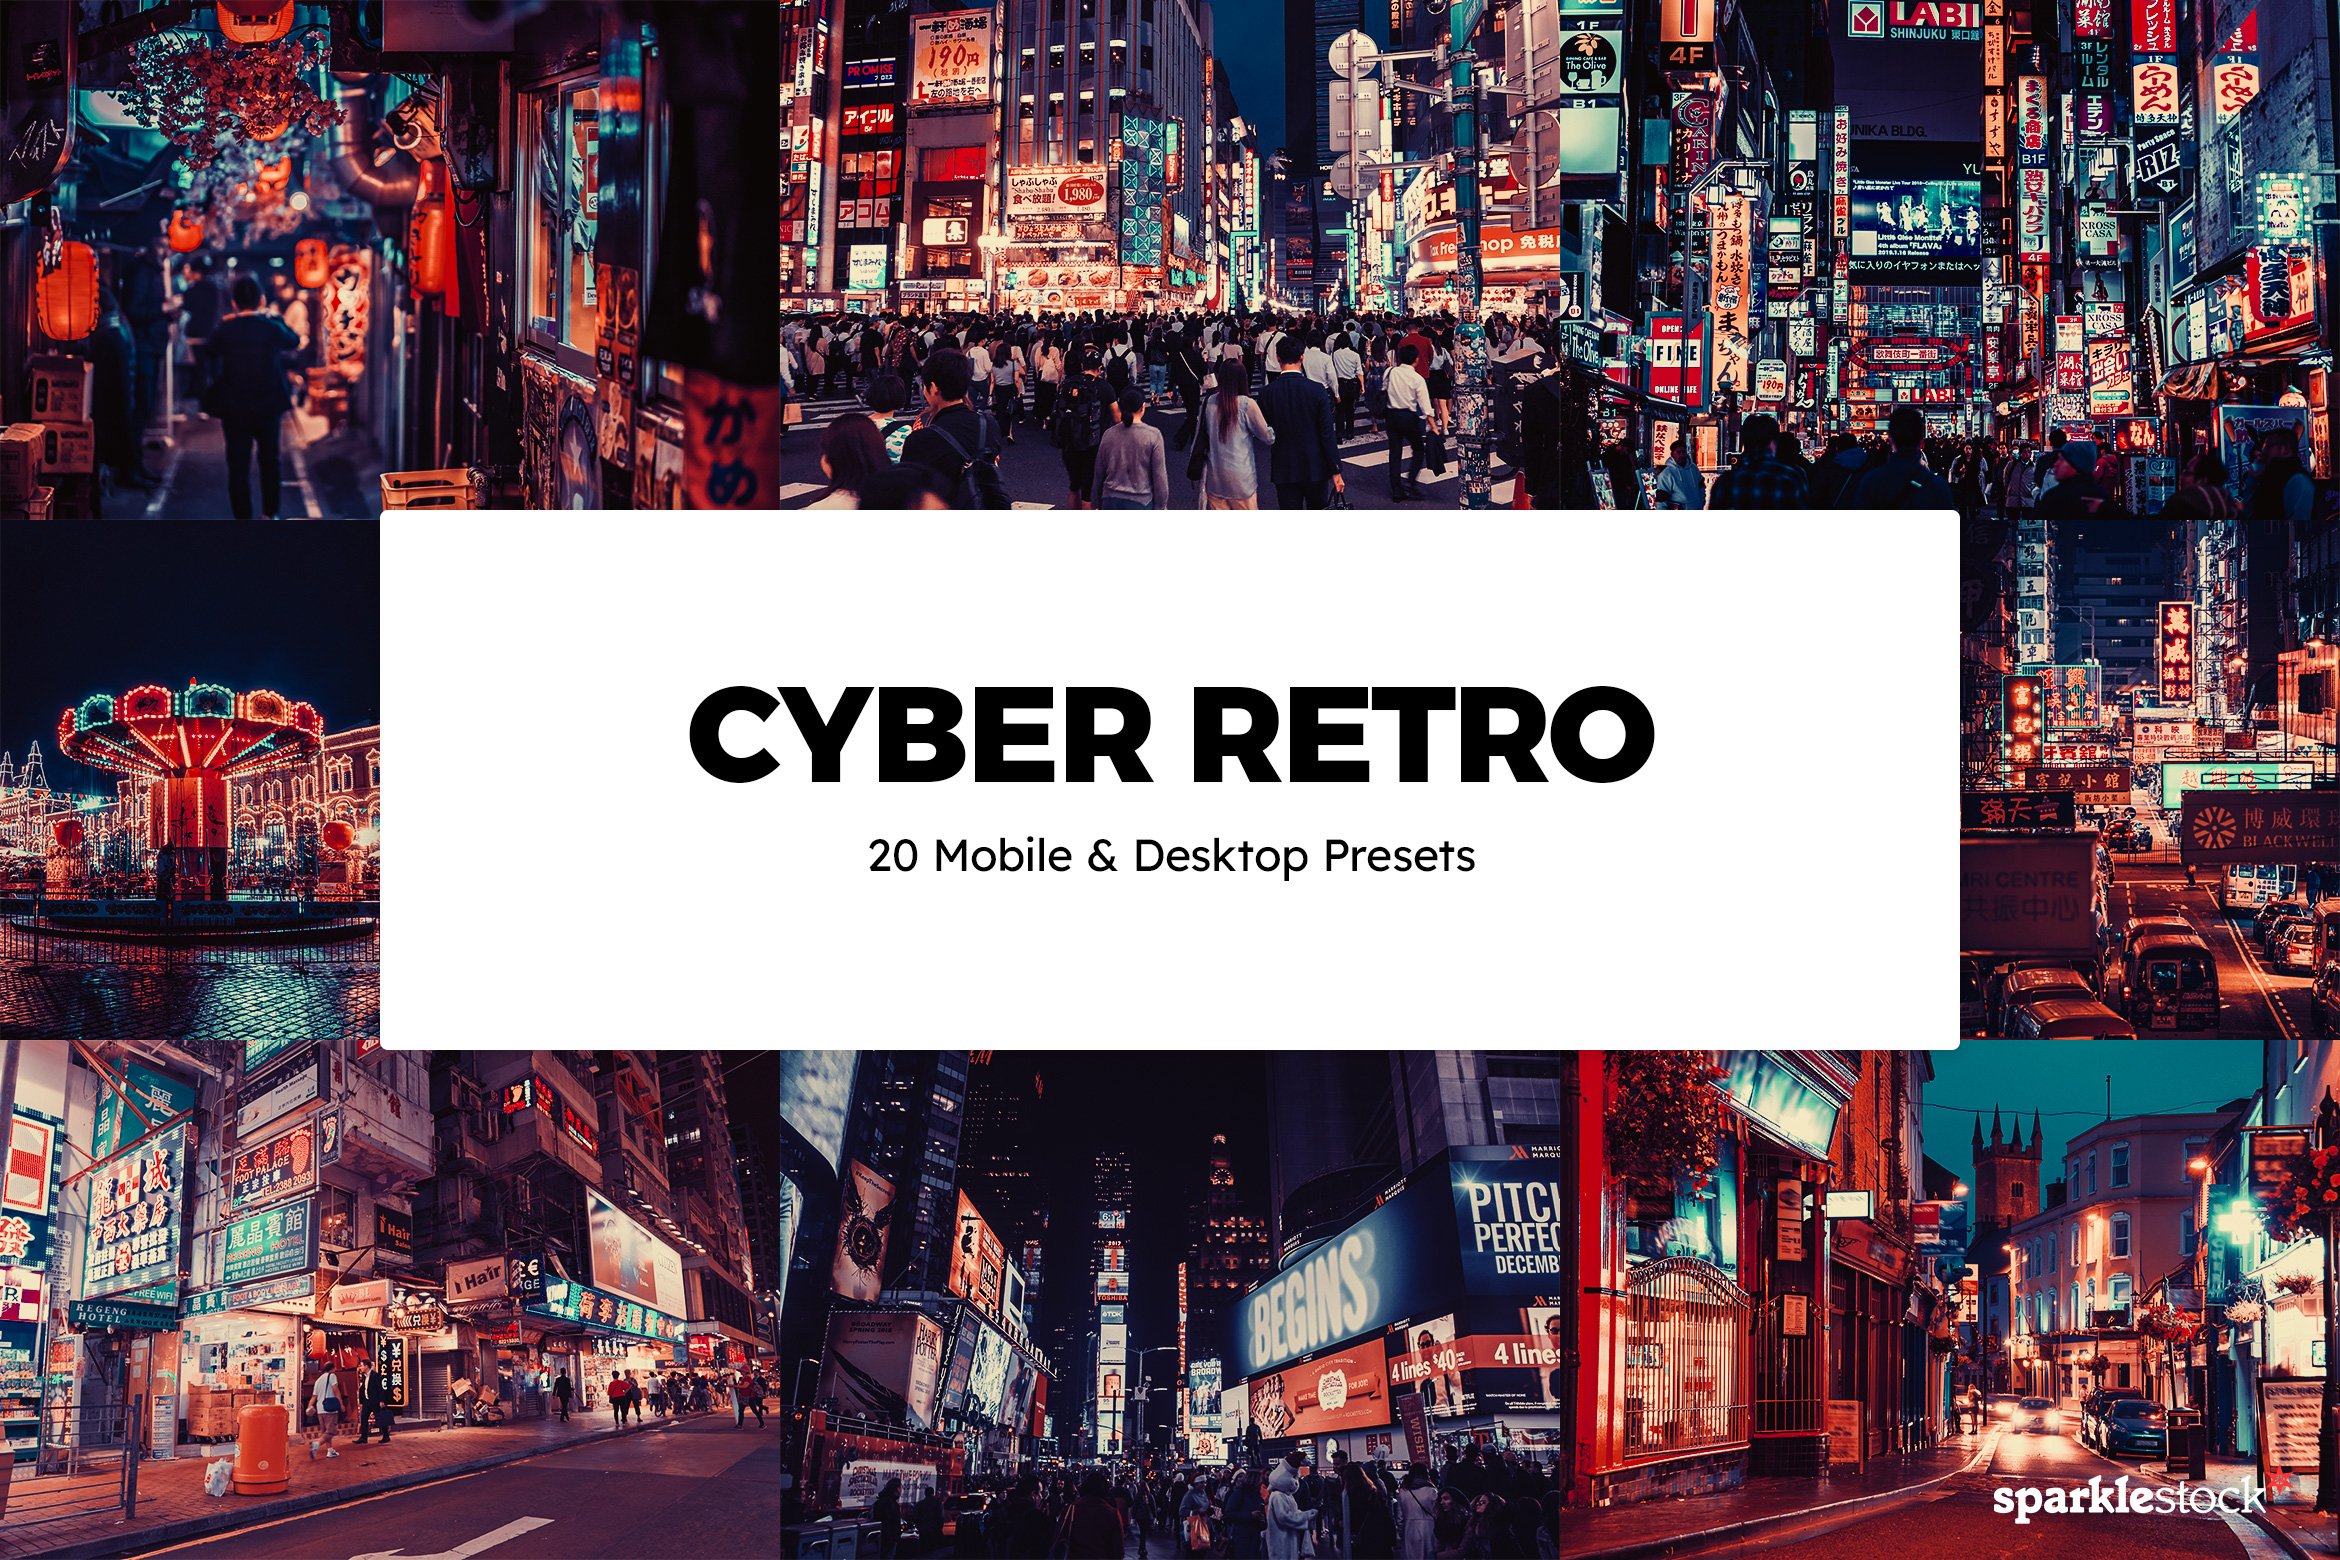 20 Cyber Retro Lightroom Presetscover image.